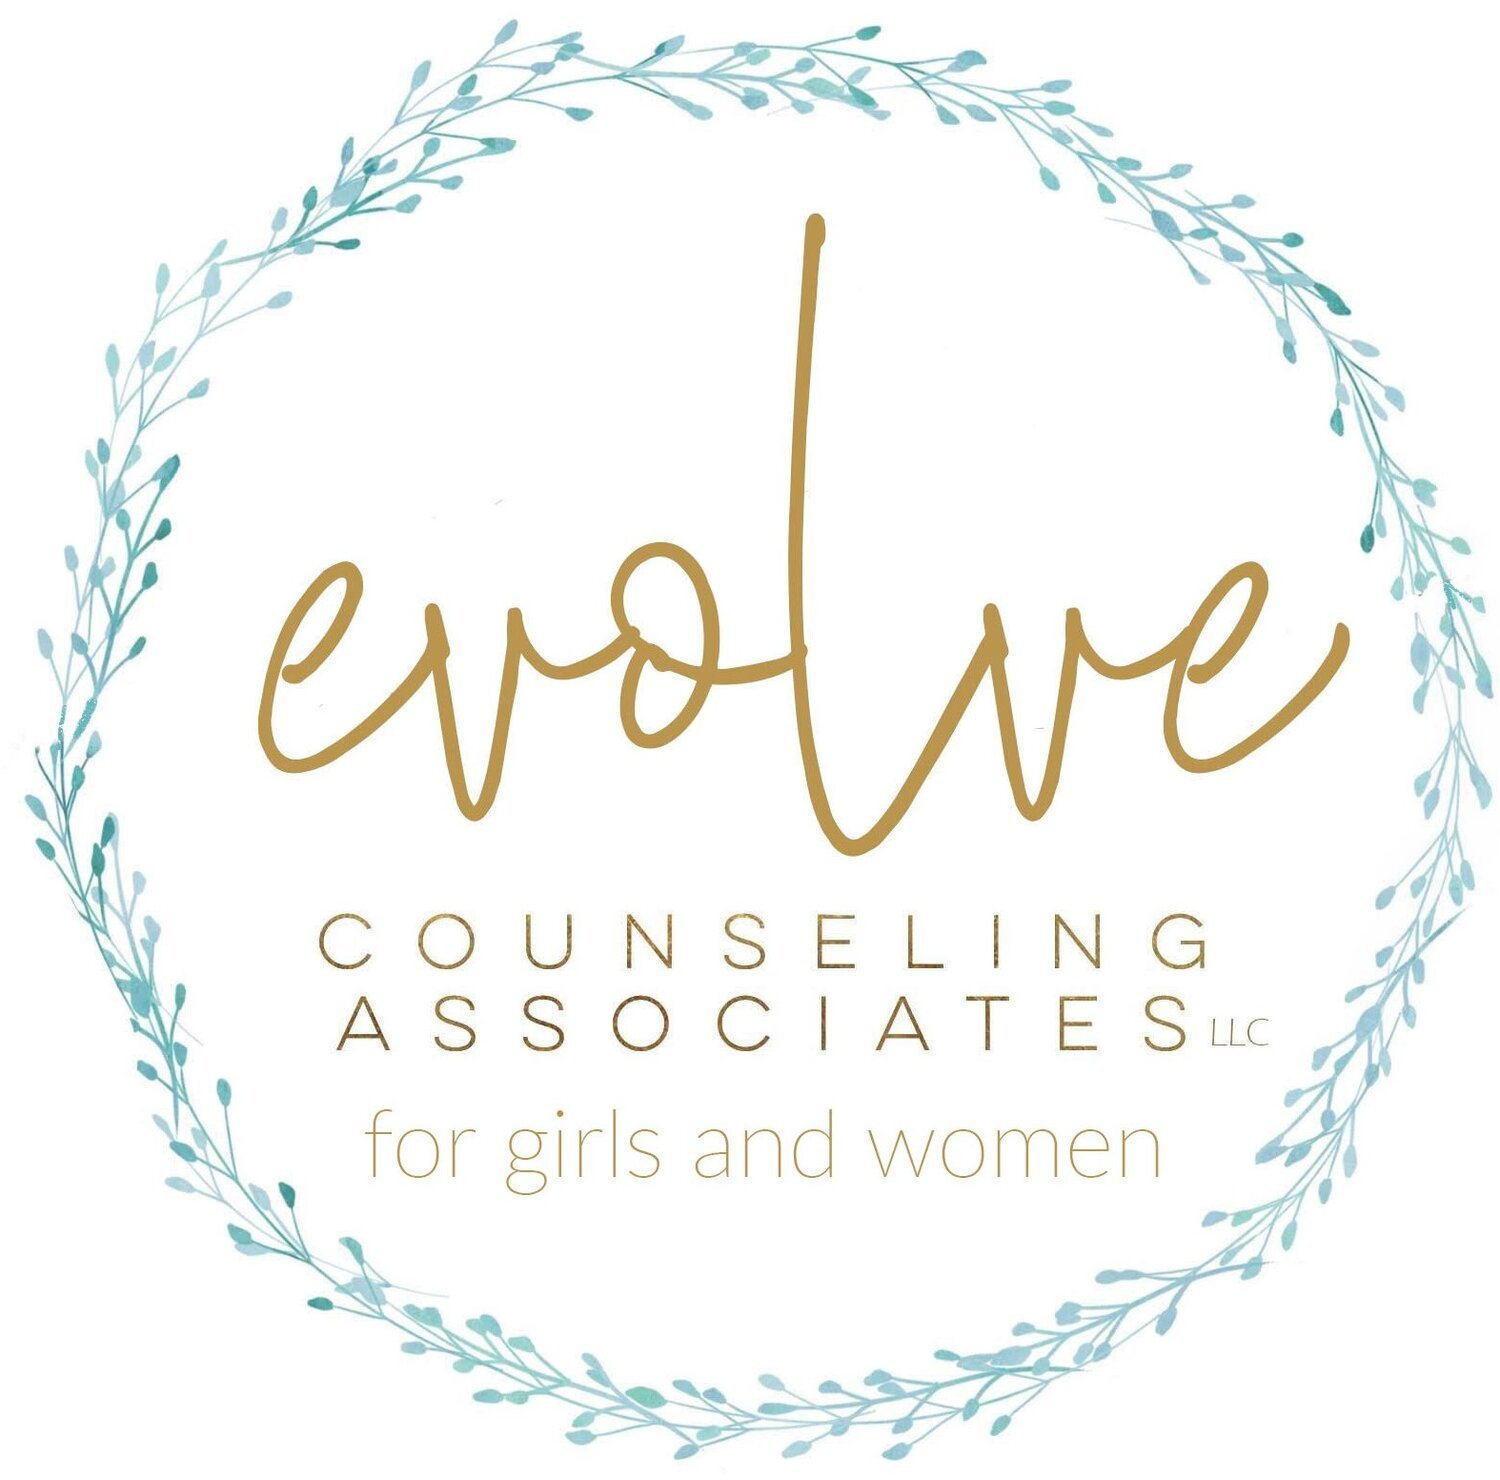 Evolve Counseling Associates, LLC